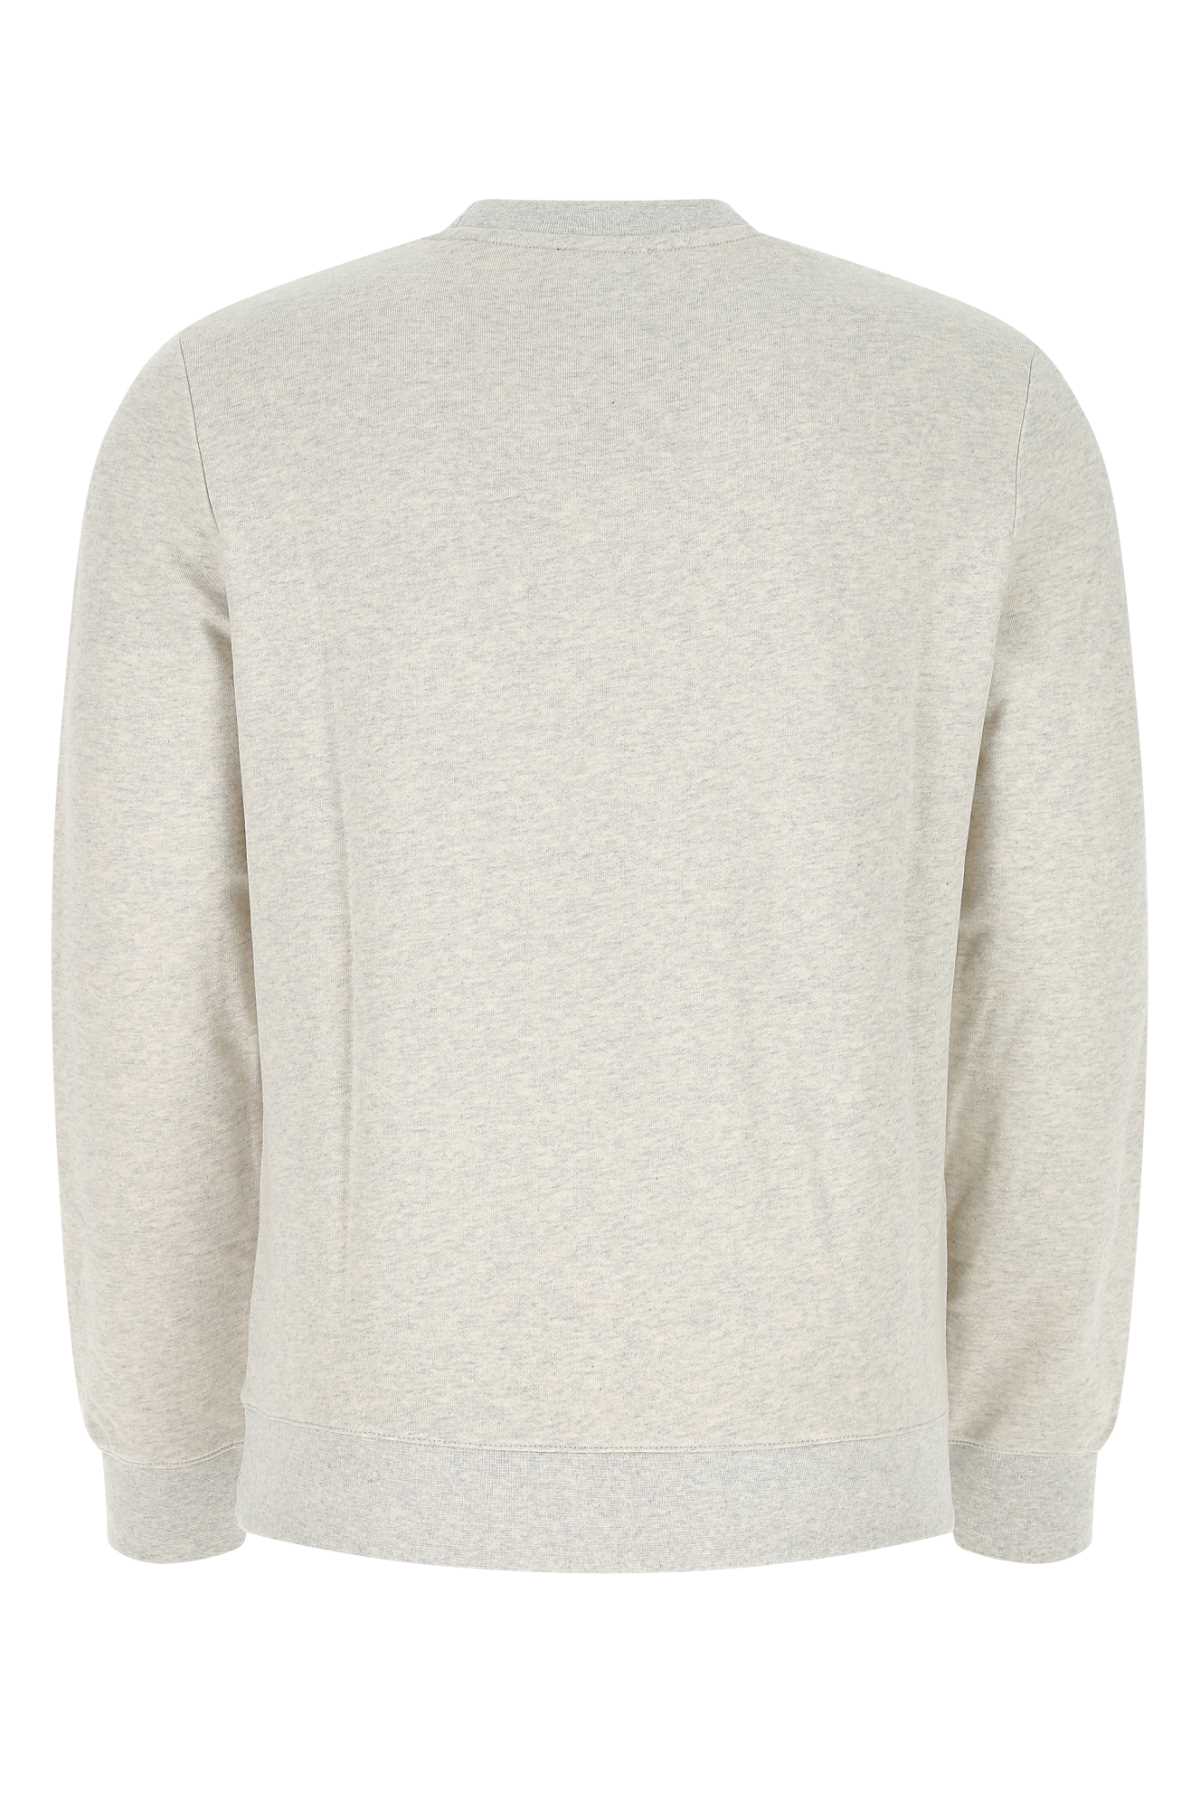 Apc Grey Cotton Sweatshirt In Paa